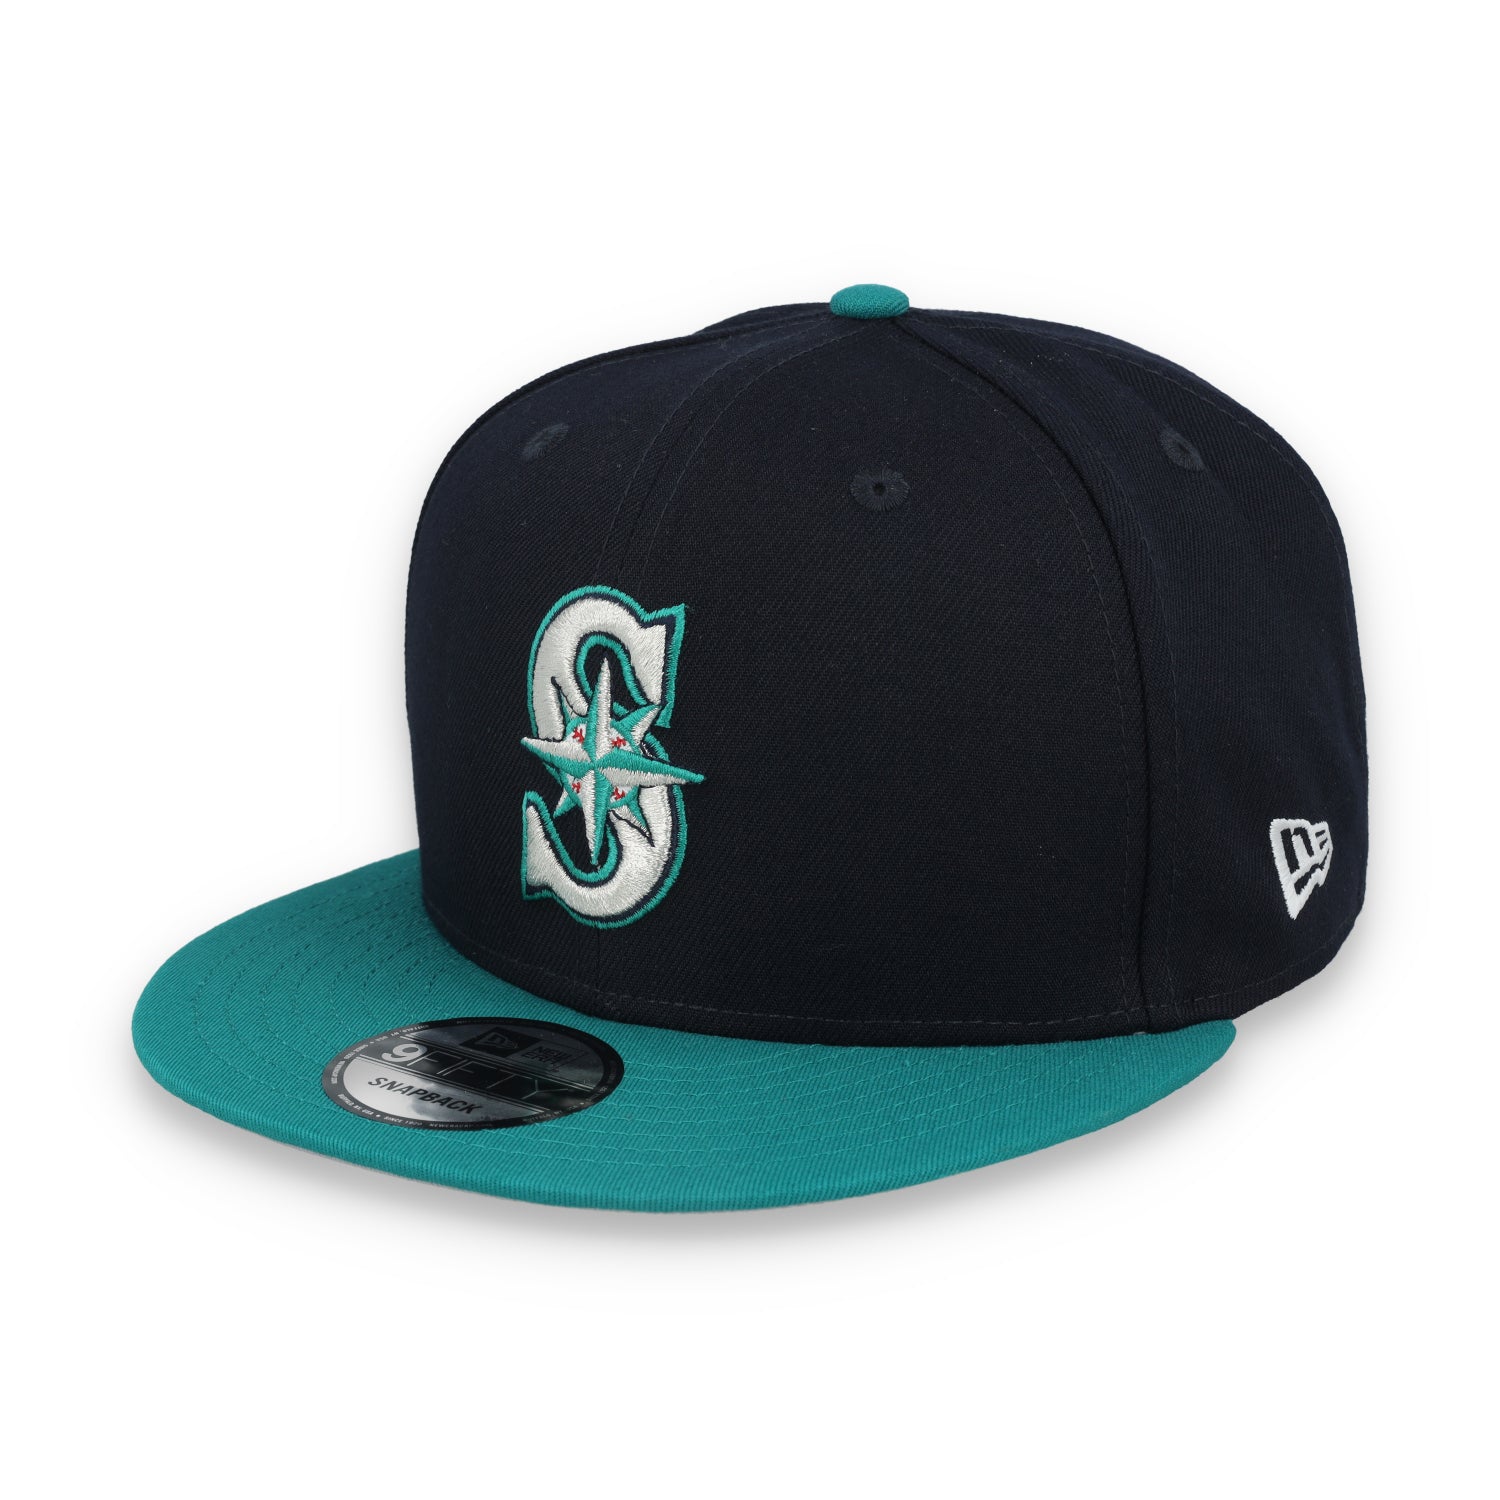 New Era Seattle Mariners On Field Alternative 9FIFTY Snapback Hat